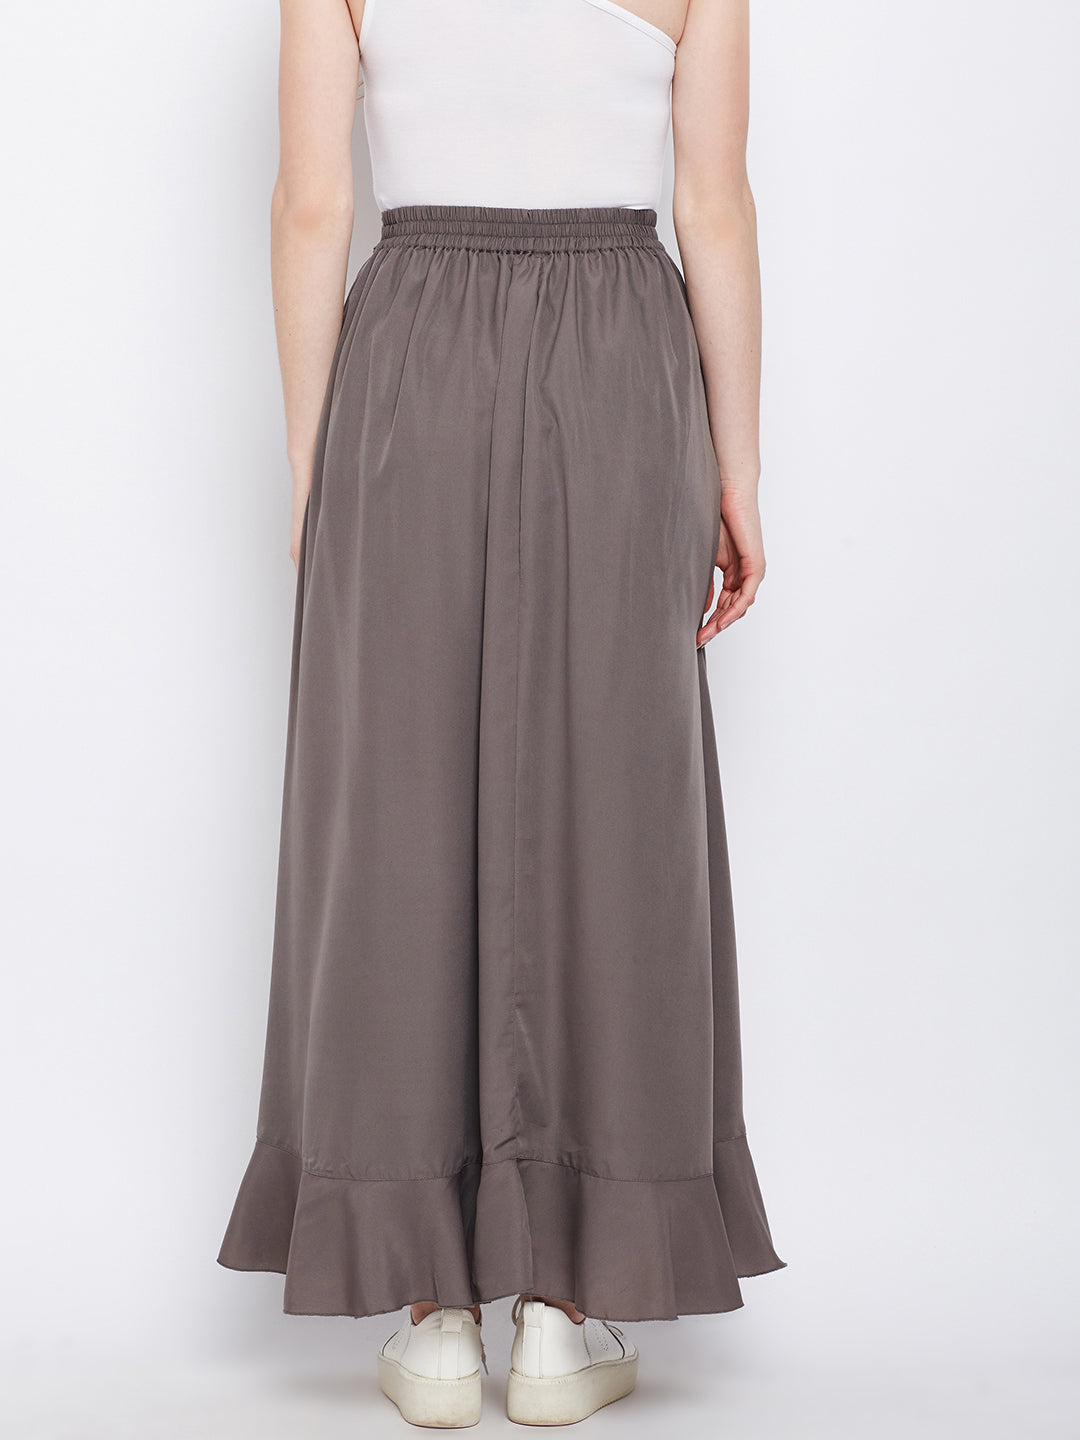 Berrylush Women Solid Grey Waist Tie-Up Ruffled Maxi Skirt with Attach